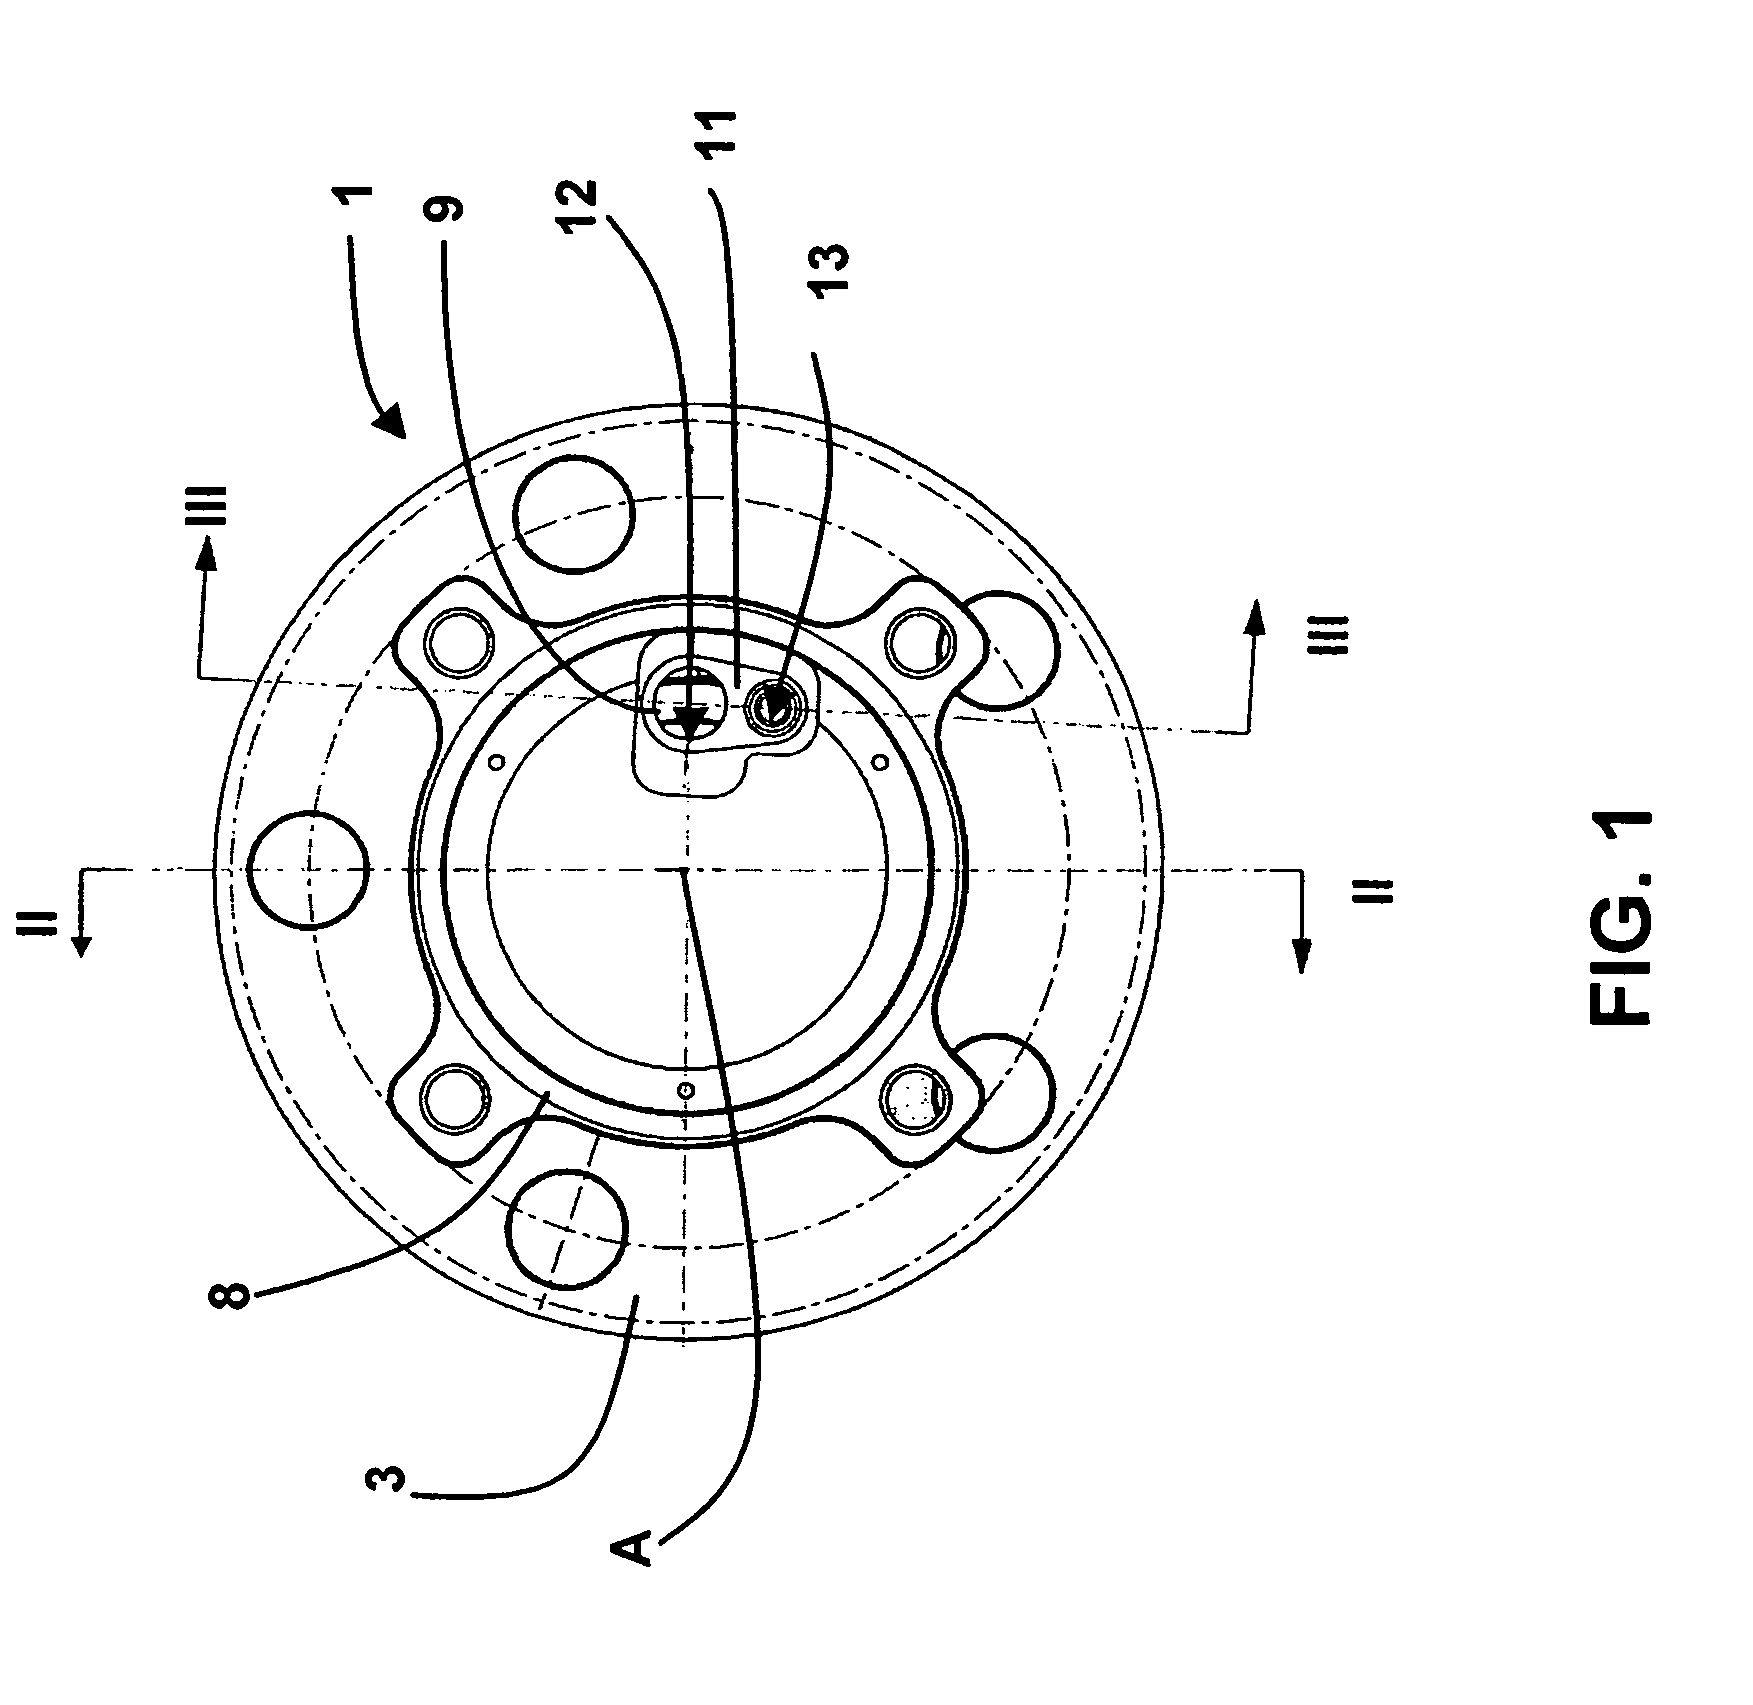 Sensor-holding lid for a wheel hub bearing